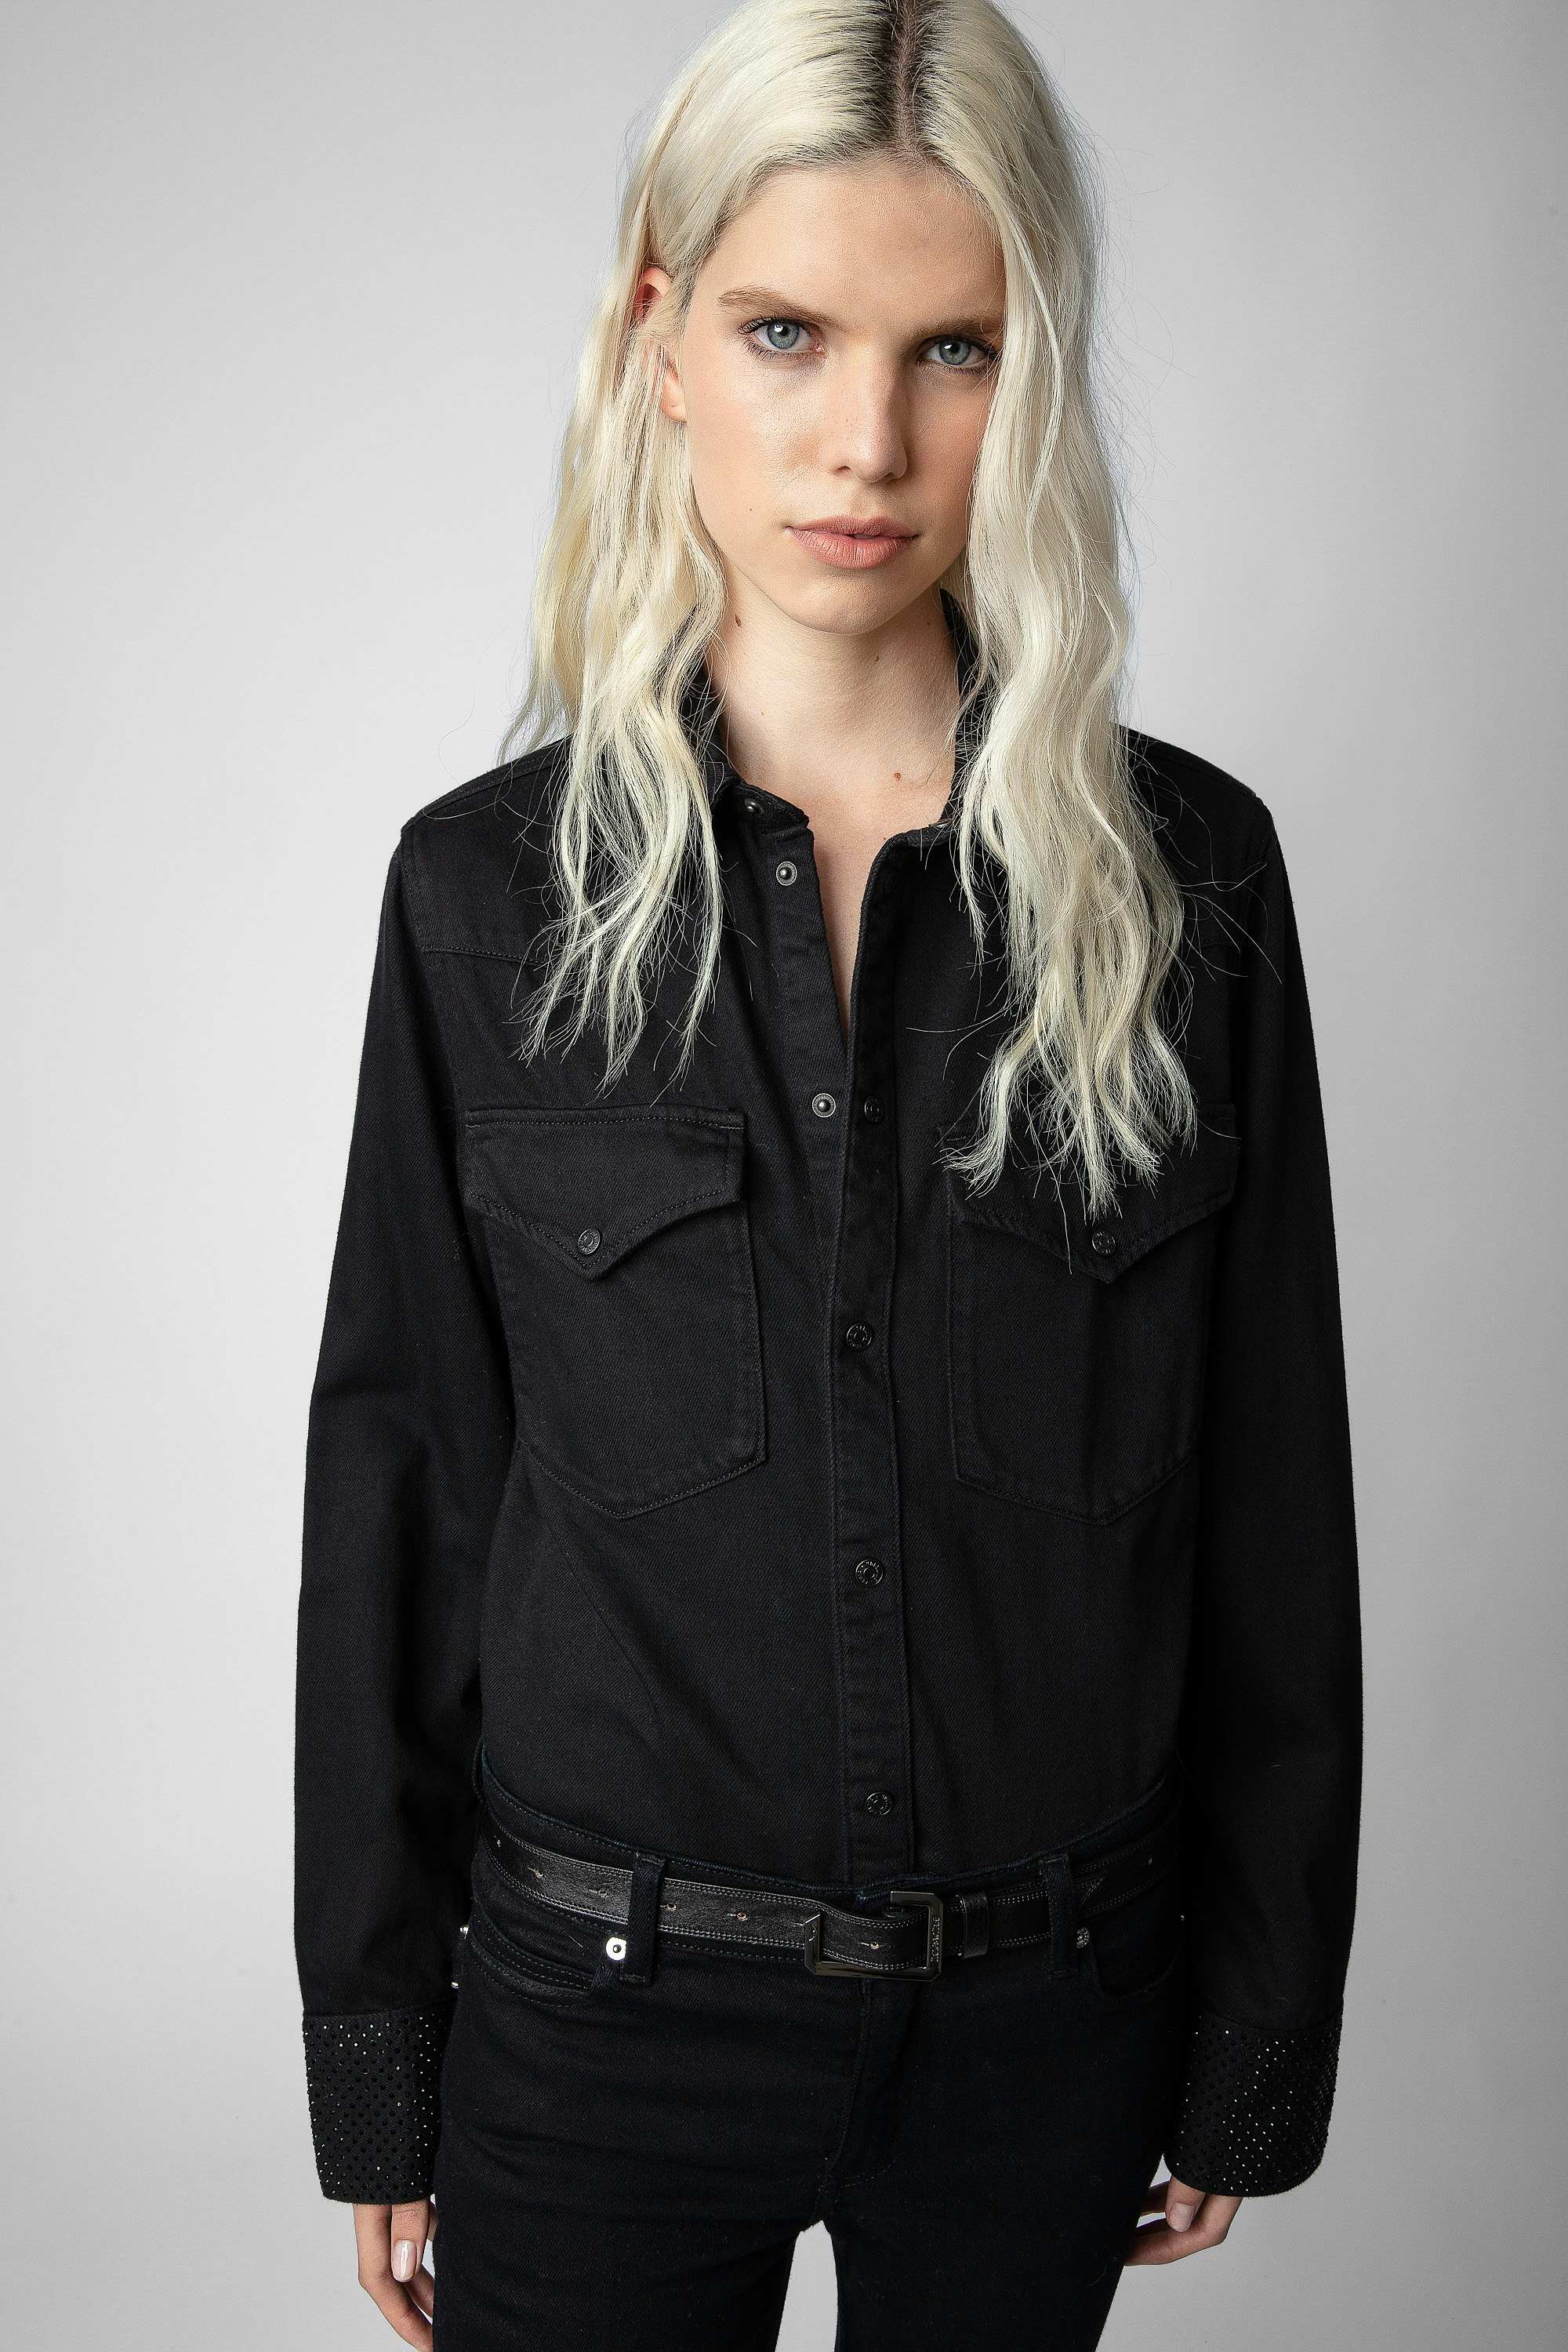 Thelma Shirt - Women’s black cotton shirt with rhinestone embellishment on the cuffs